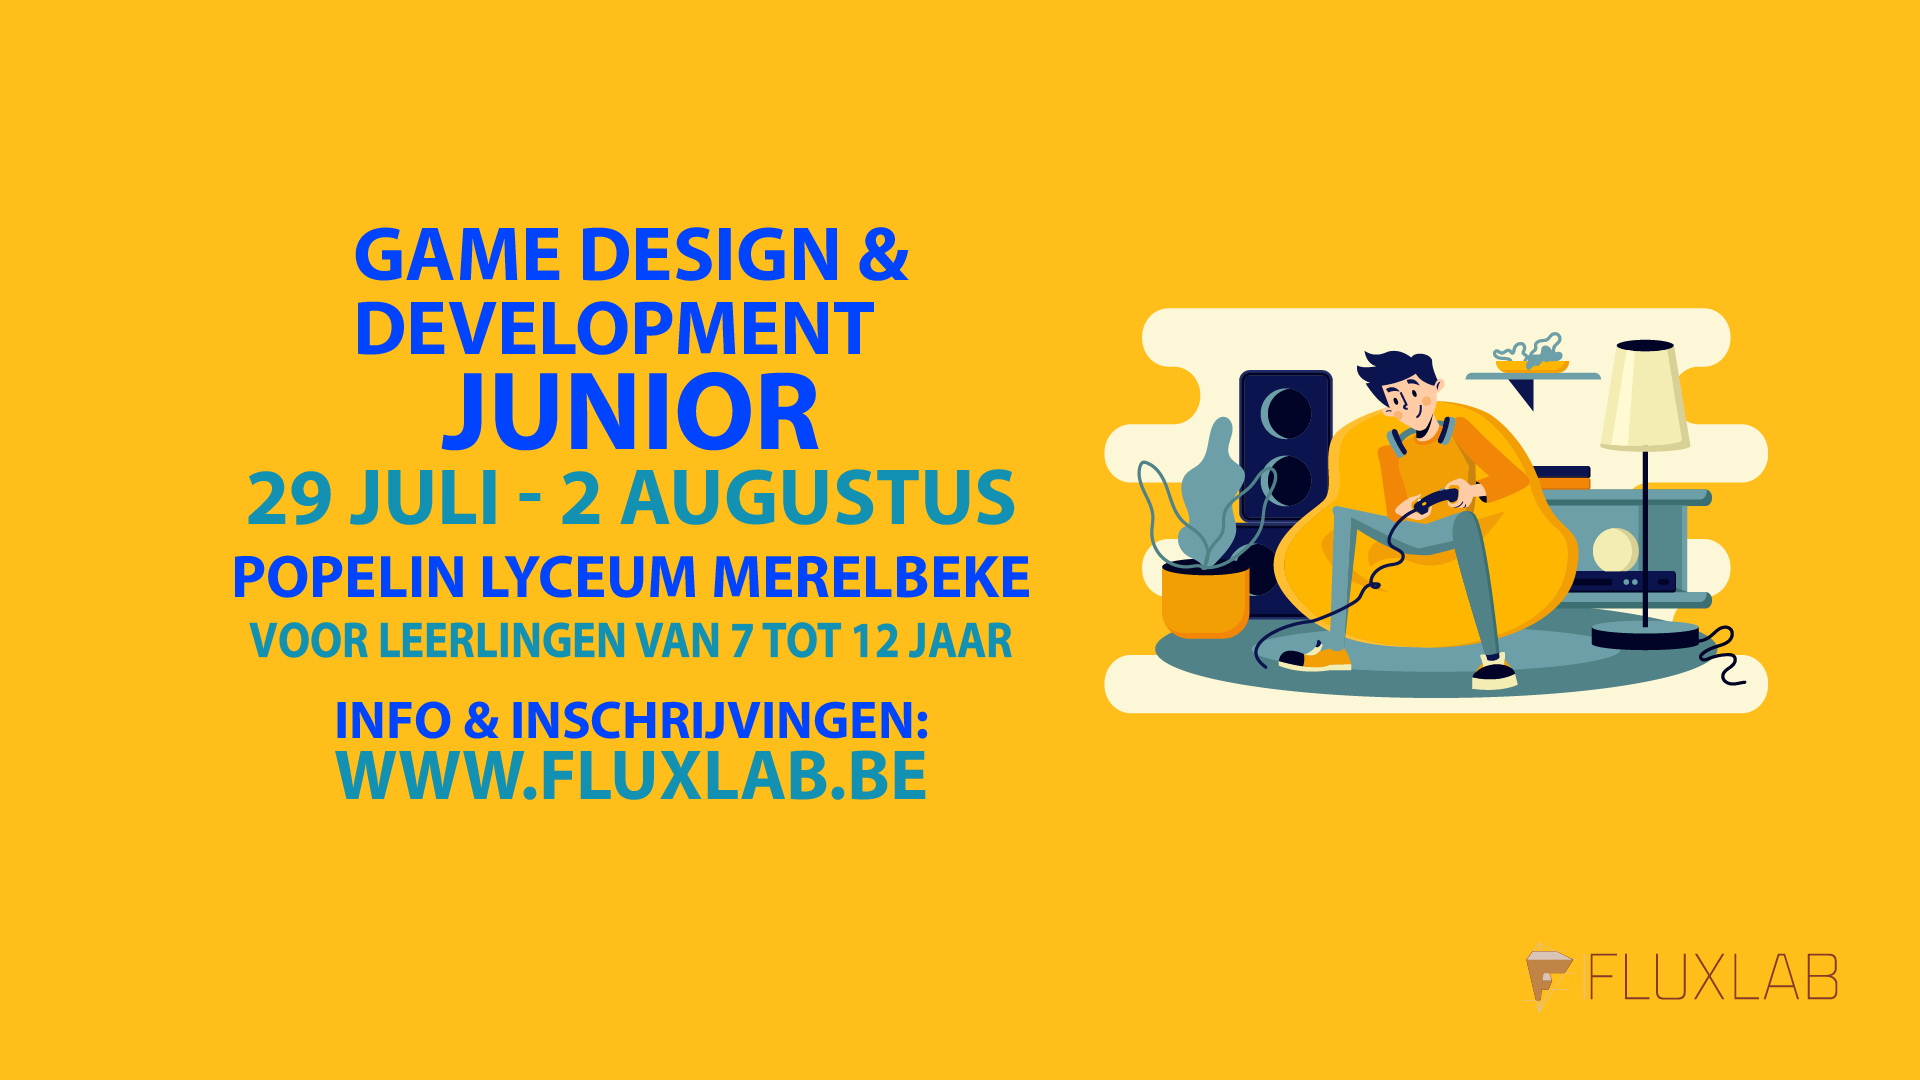 game design & development junior popelin lyceum merelbeke zomer